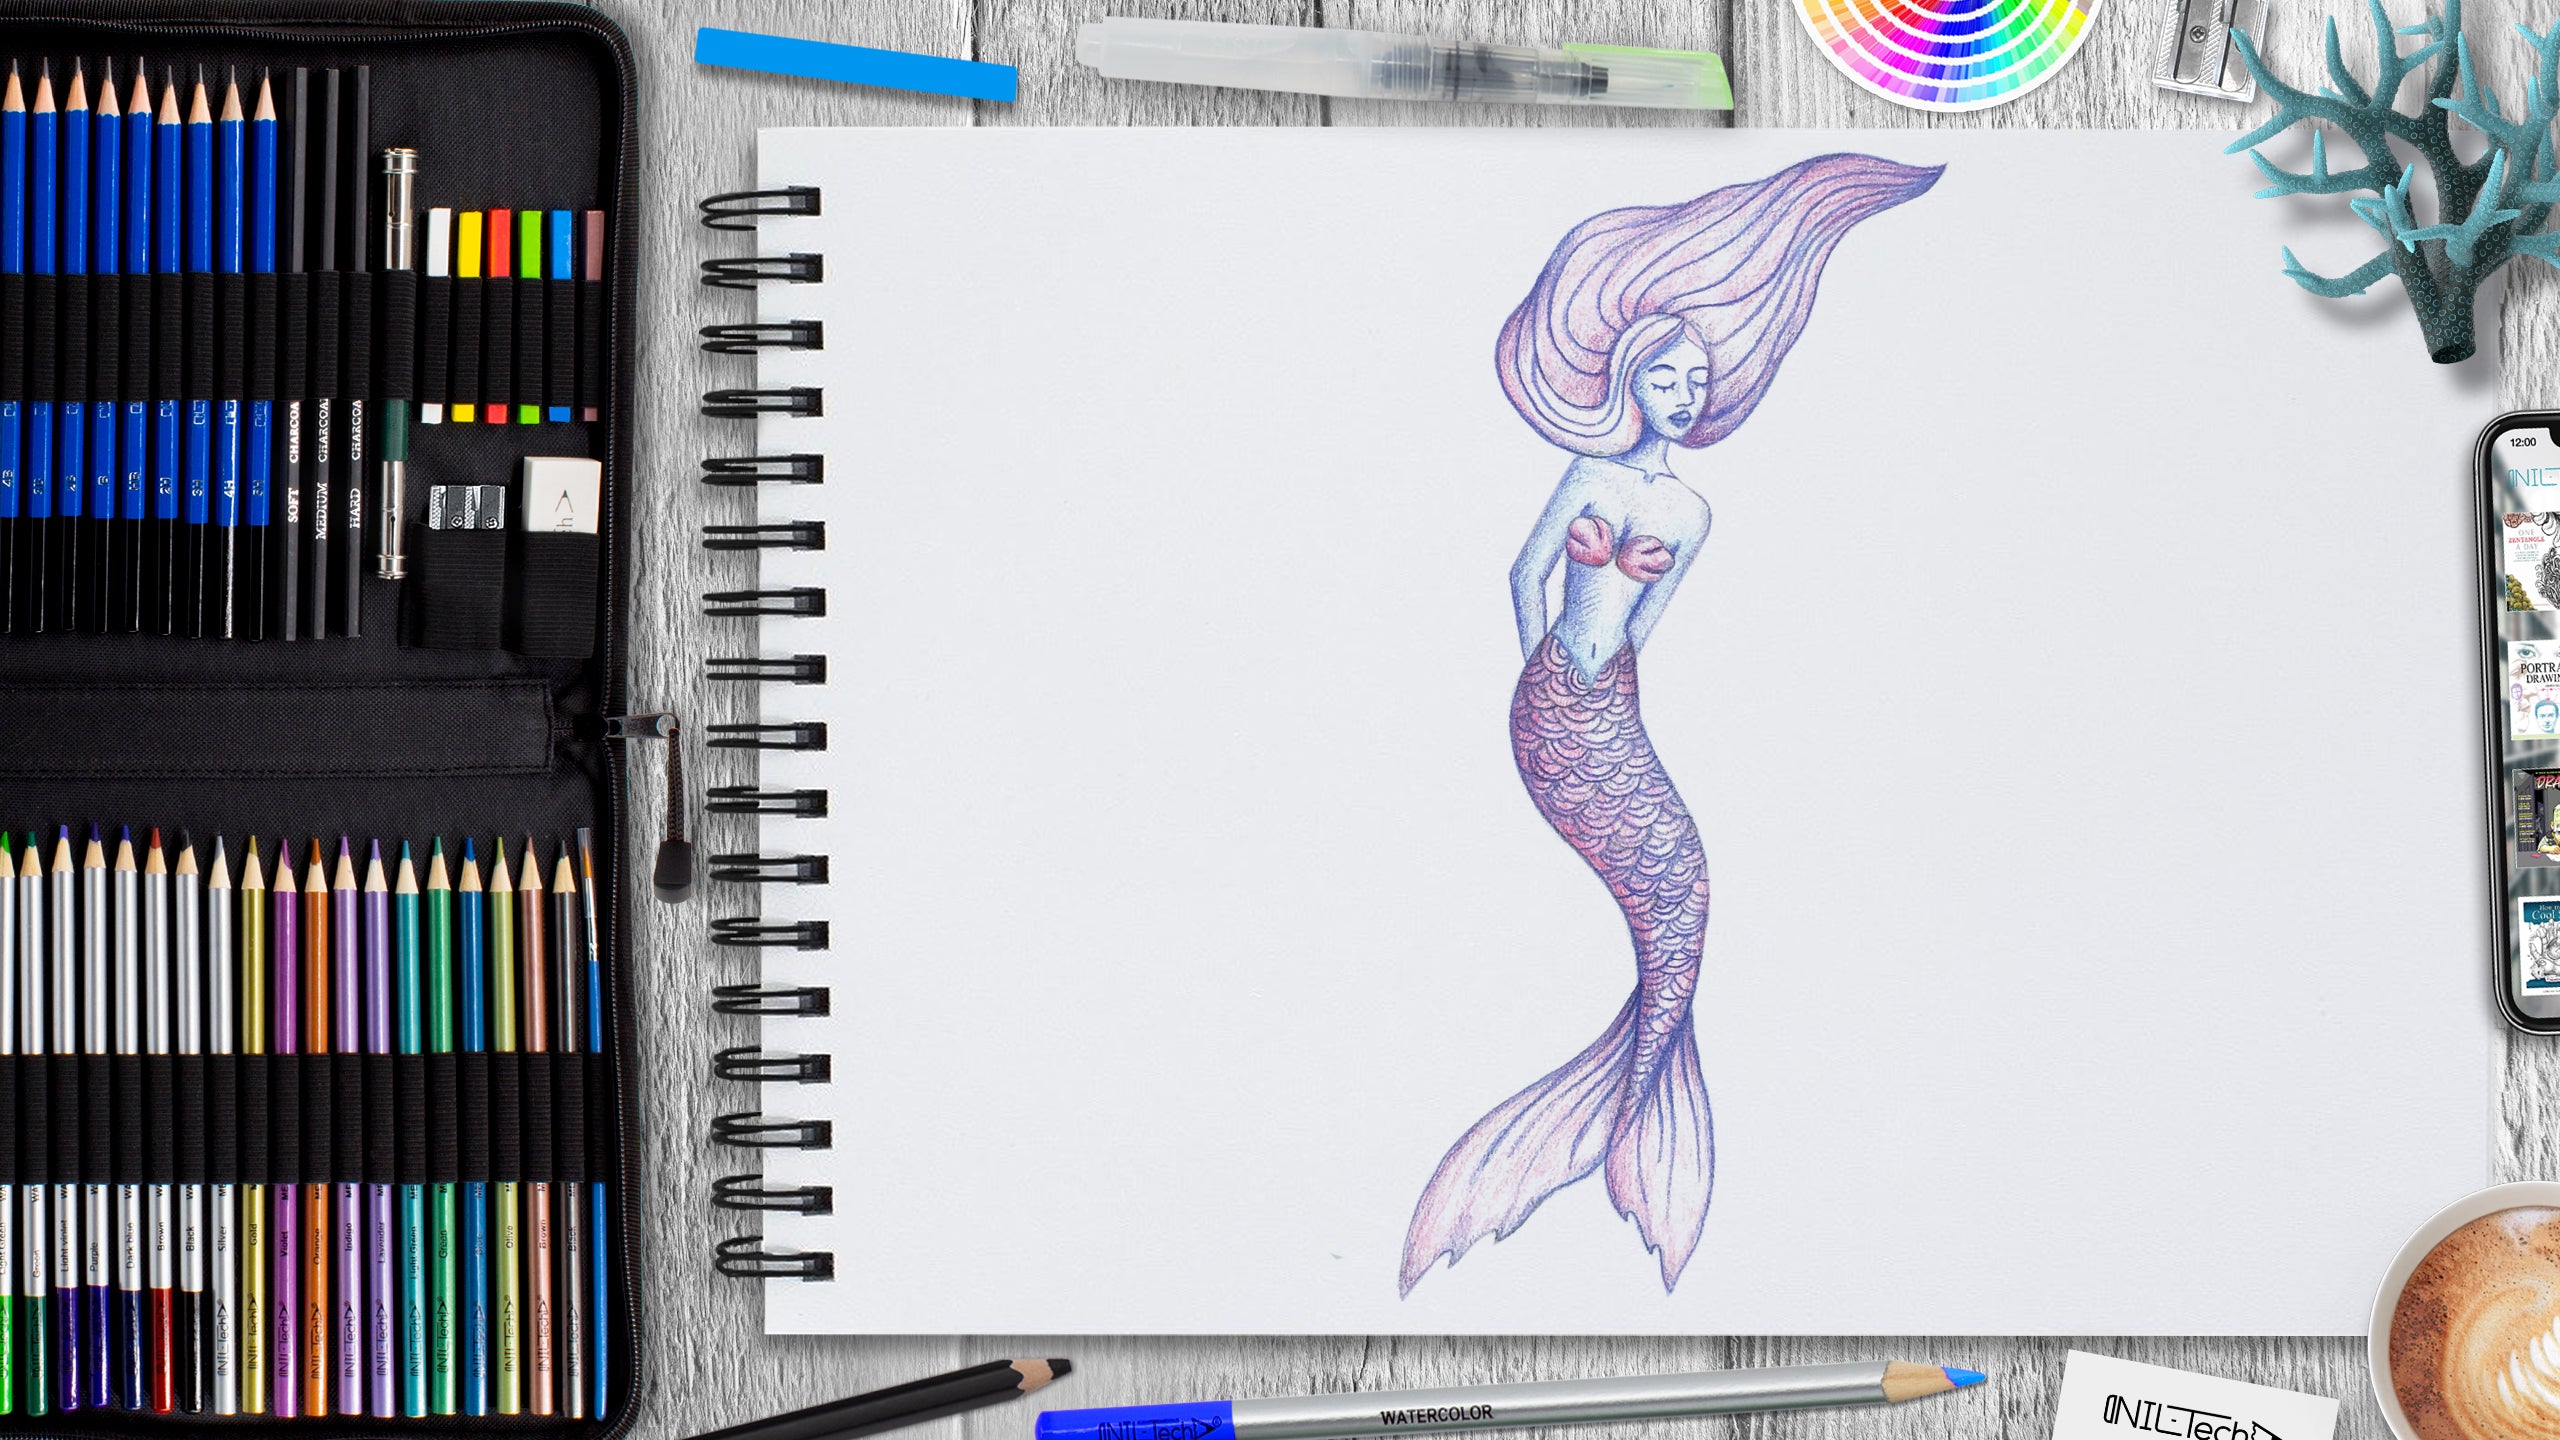 Mermaid Drawing & Sketches for Kids - Kids Art & Craft